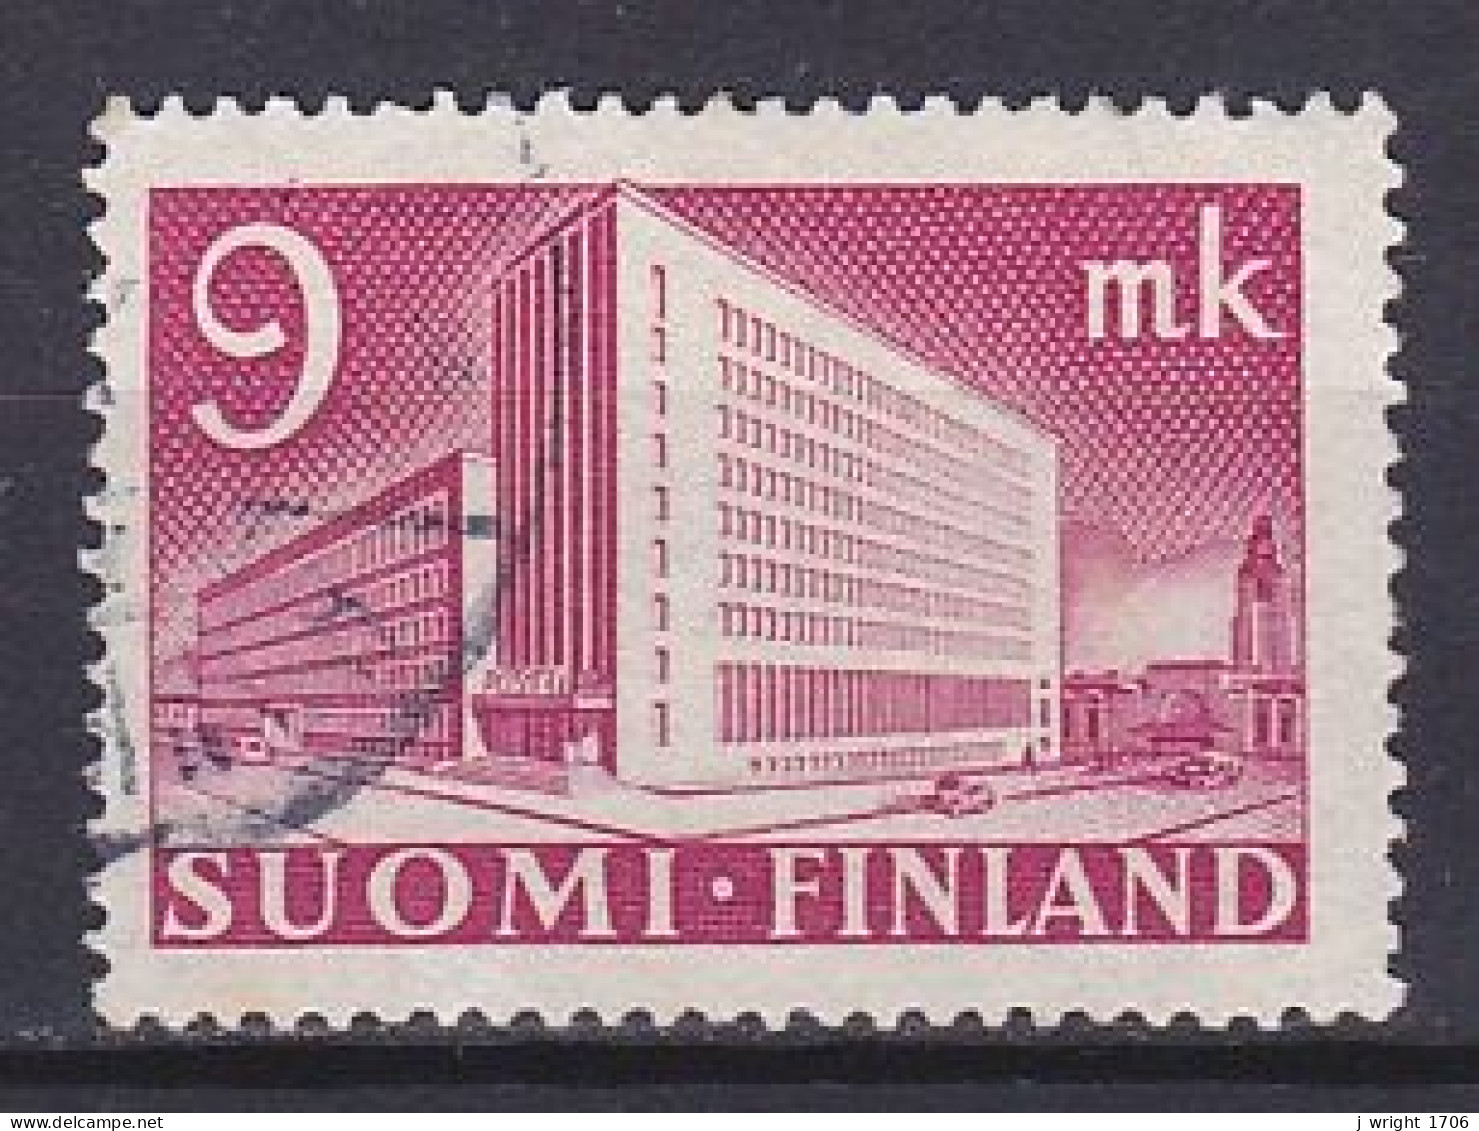 Finland, 1942, Helsinki Post Office, 9mk, USED - Usati